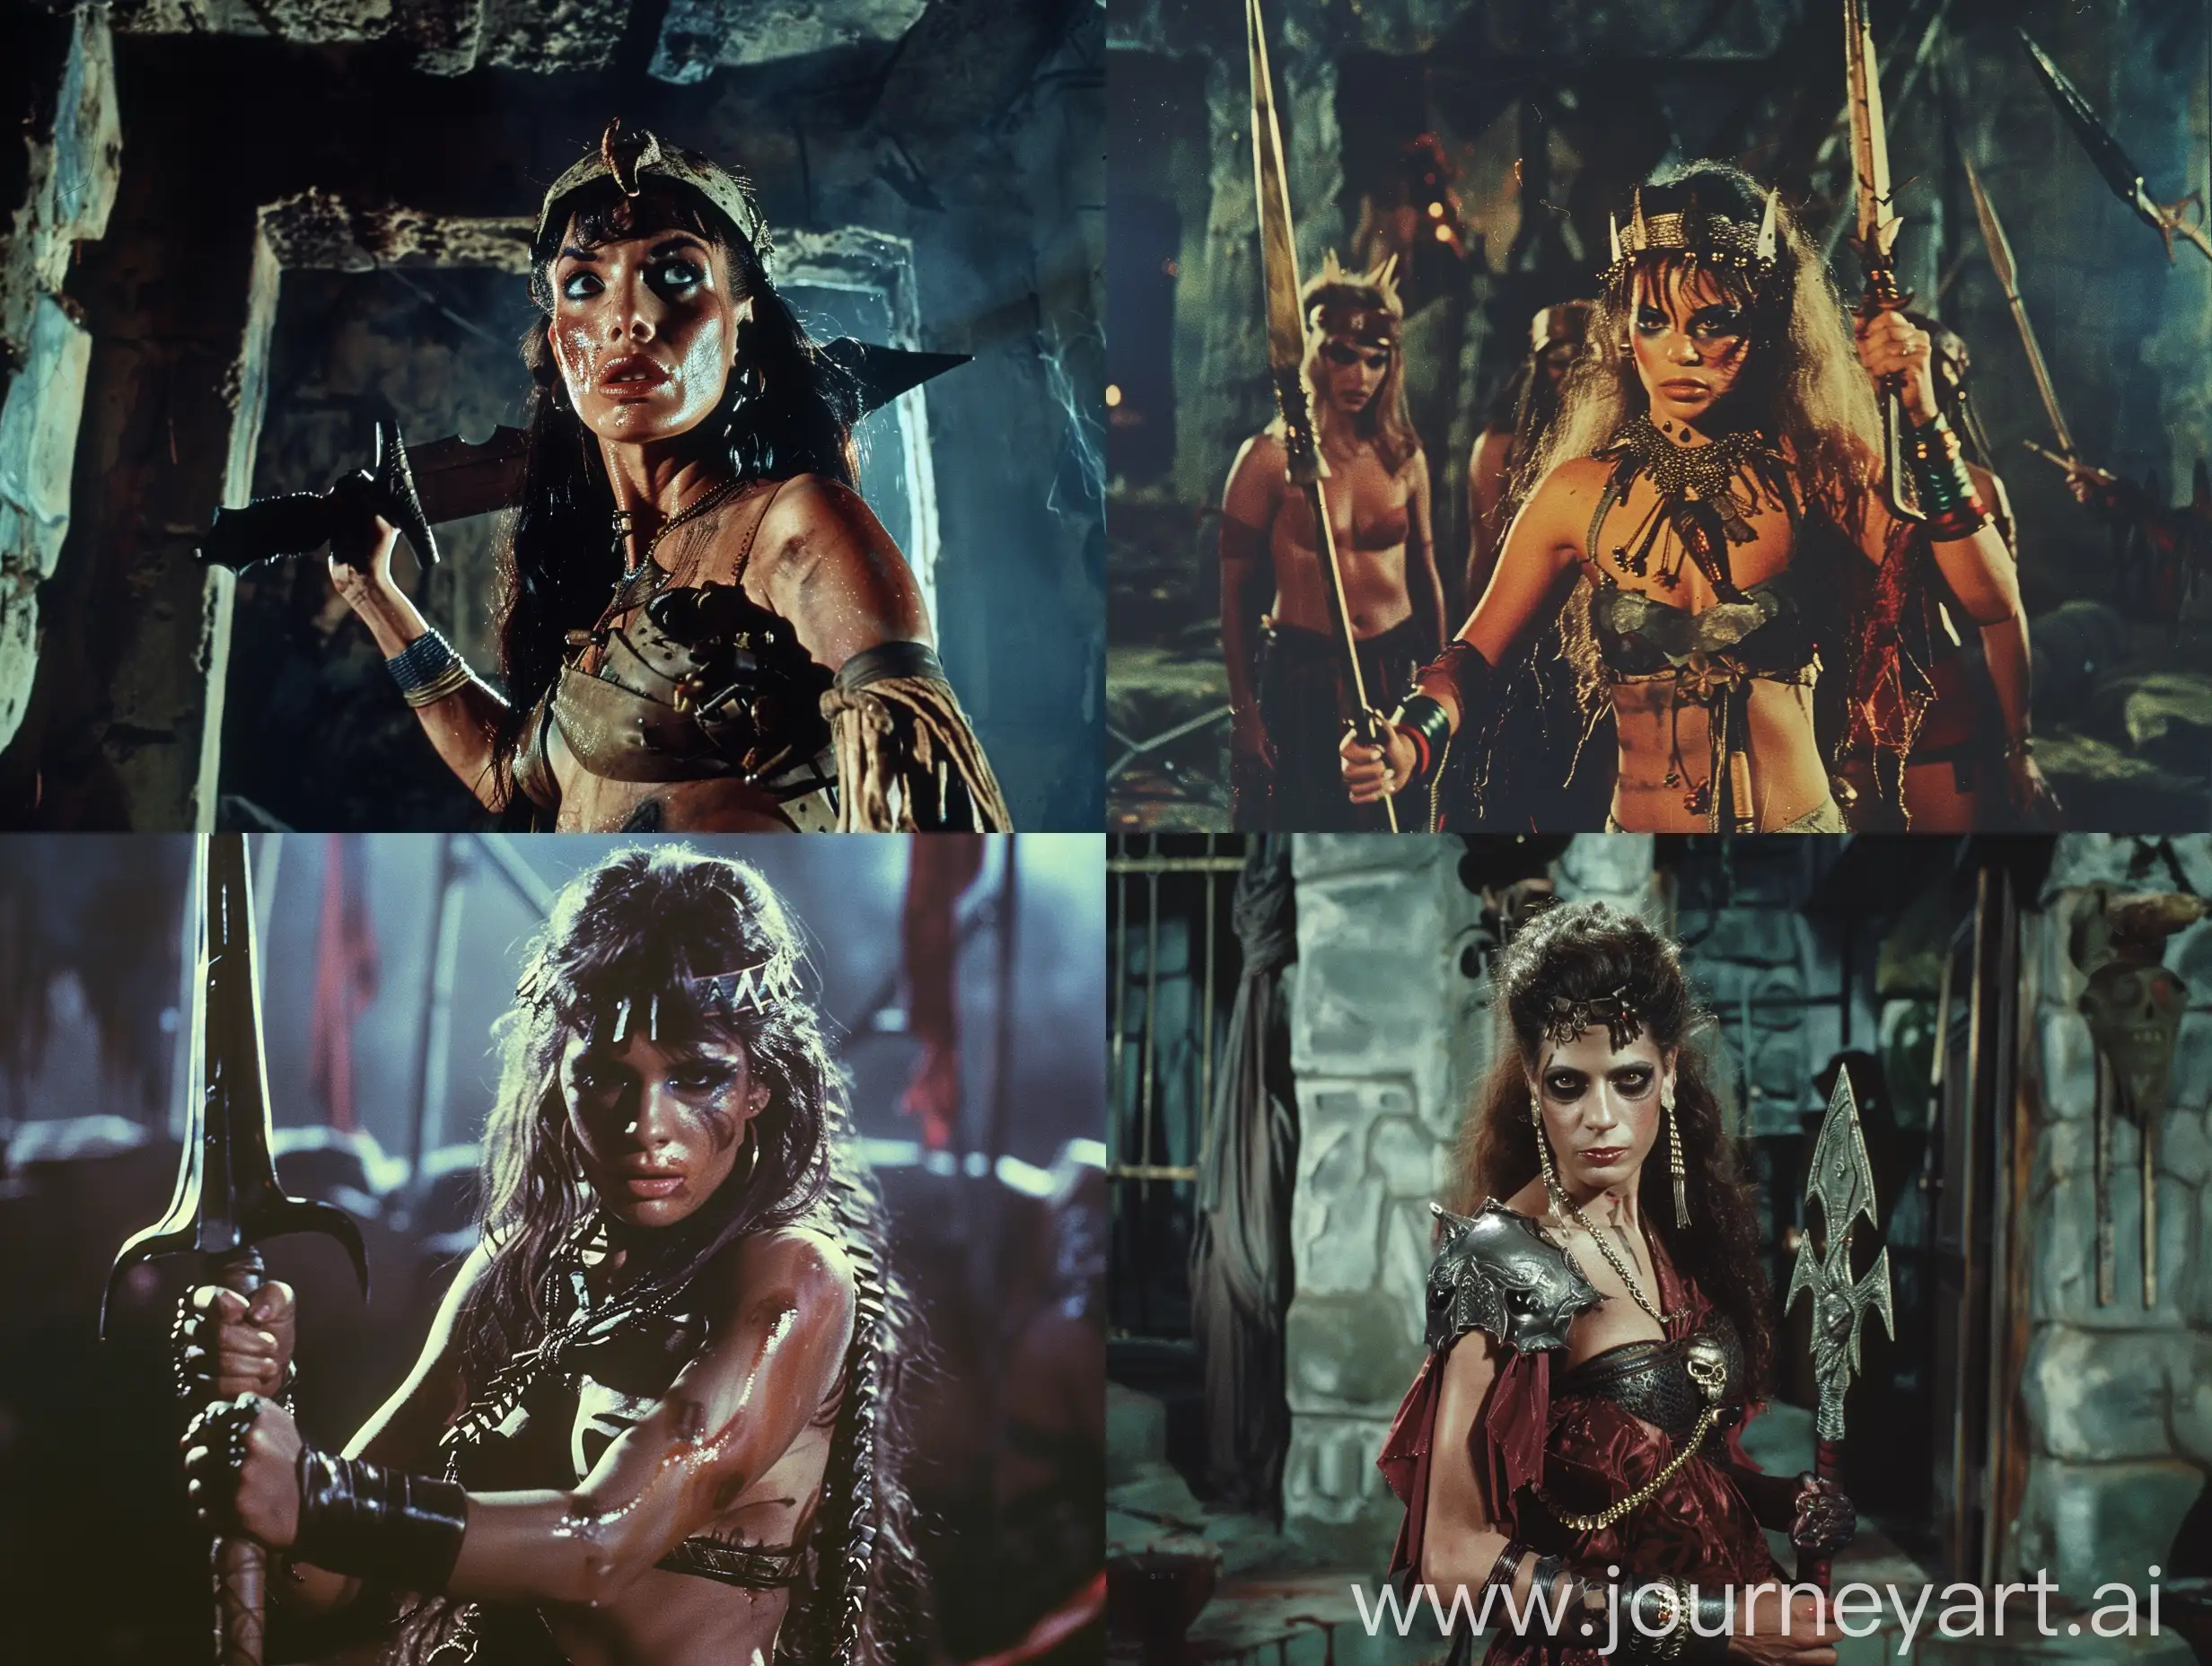 Fierce-Female-Barbarian-Confronts-Horror-in-1980s-Cinematic-Scene